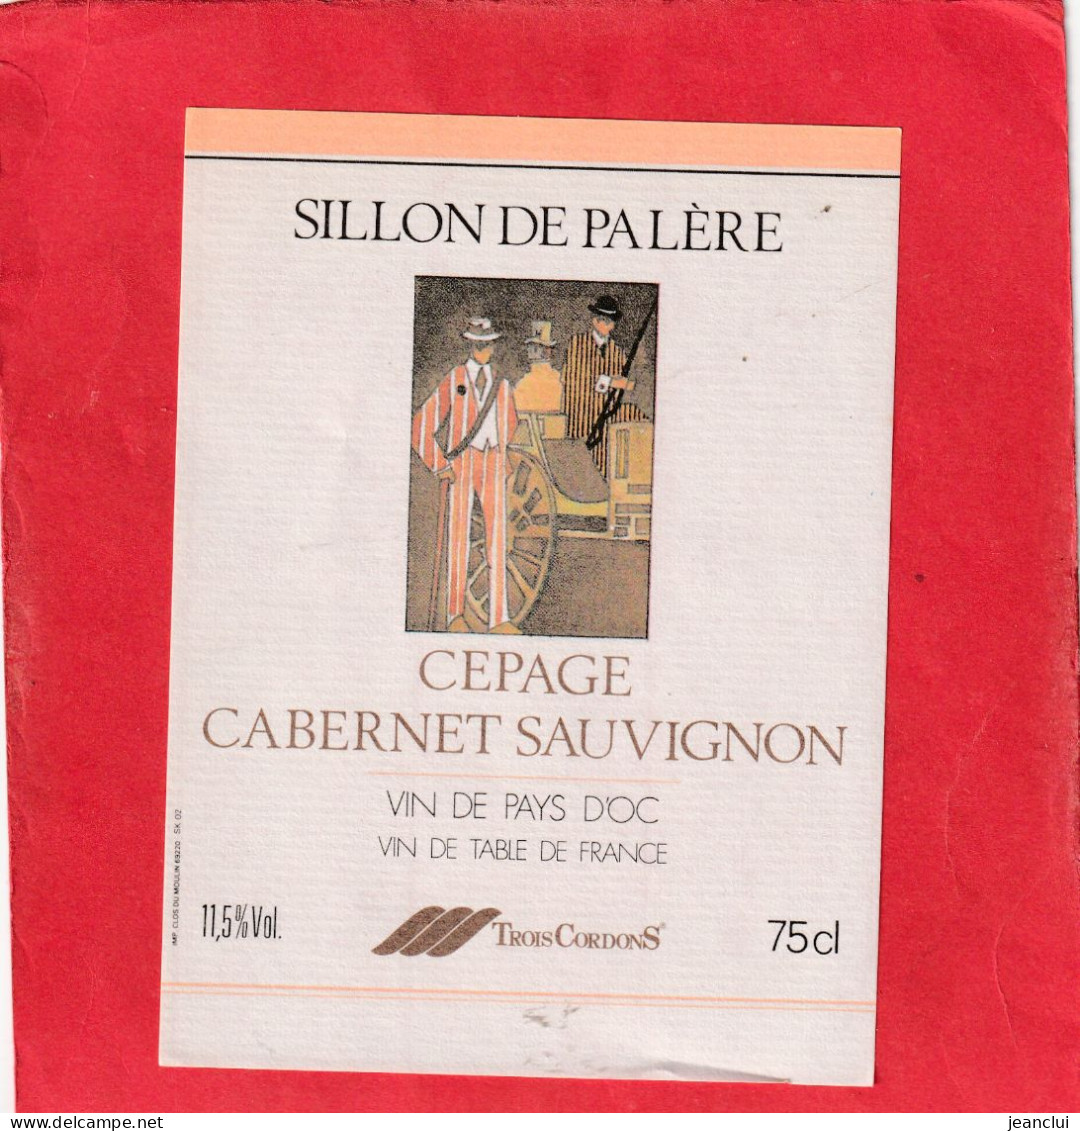 SILLON DE PALERE . CEPAGE CABERNET SAUVIGNON . VIN DE PAYS D'OC - Vin De Pays D'Oc